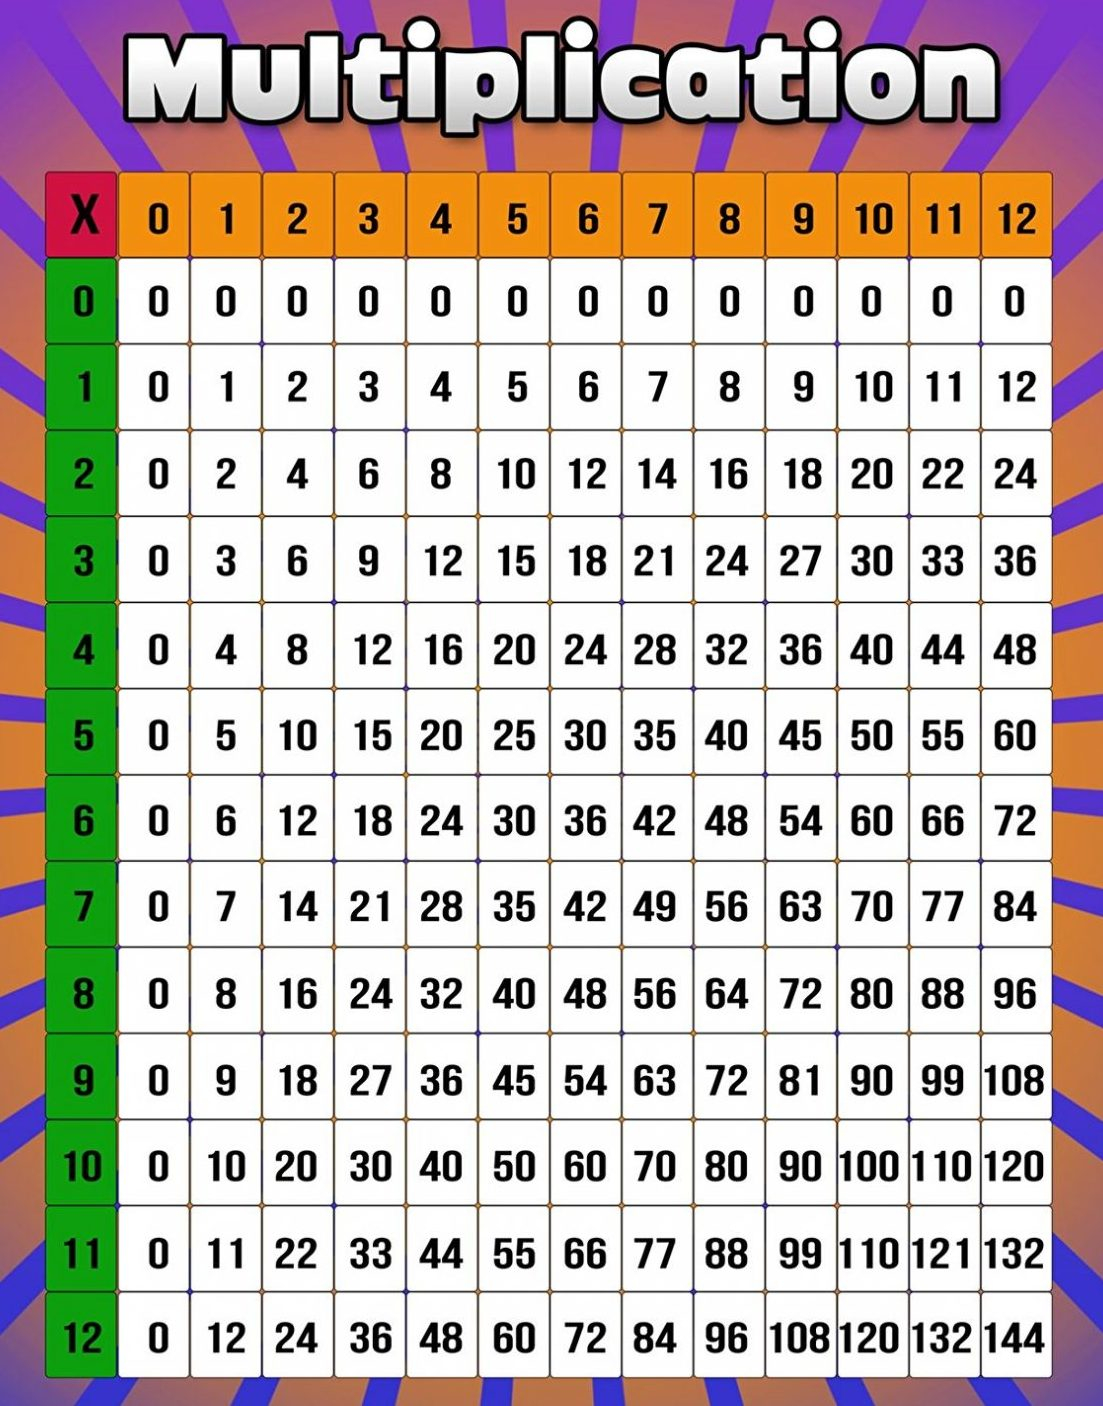 Multiplication Table Free Printable Multiplication Table 1 12 Chart PDF Malcolm Drake